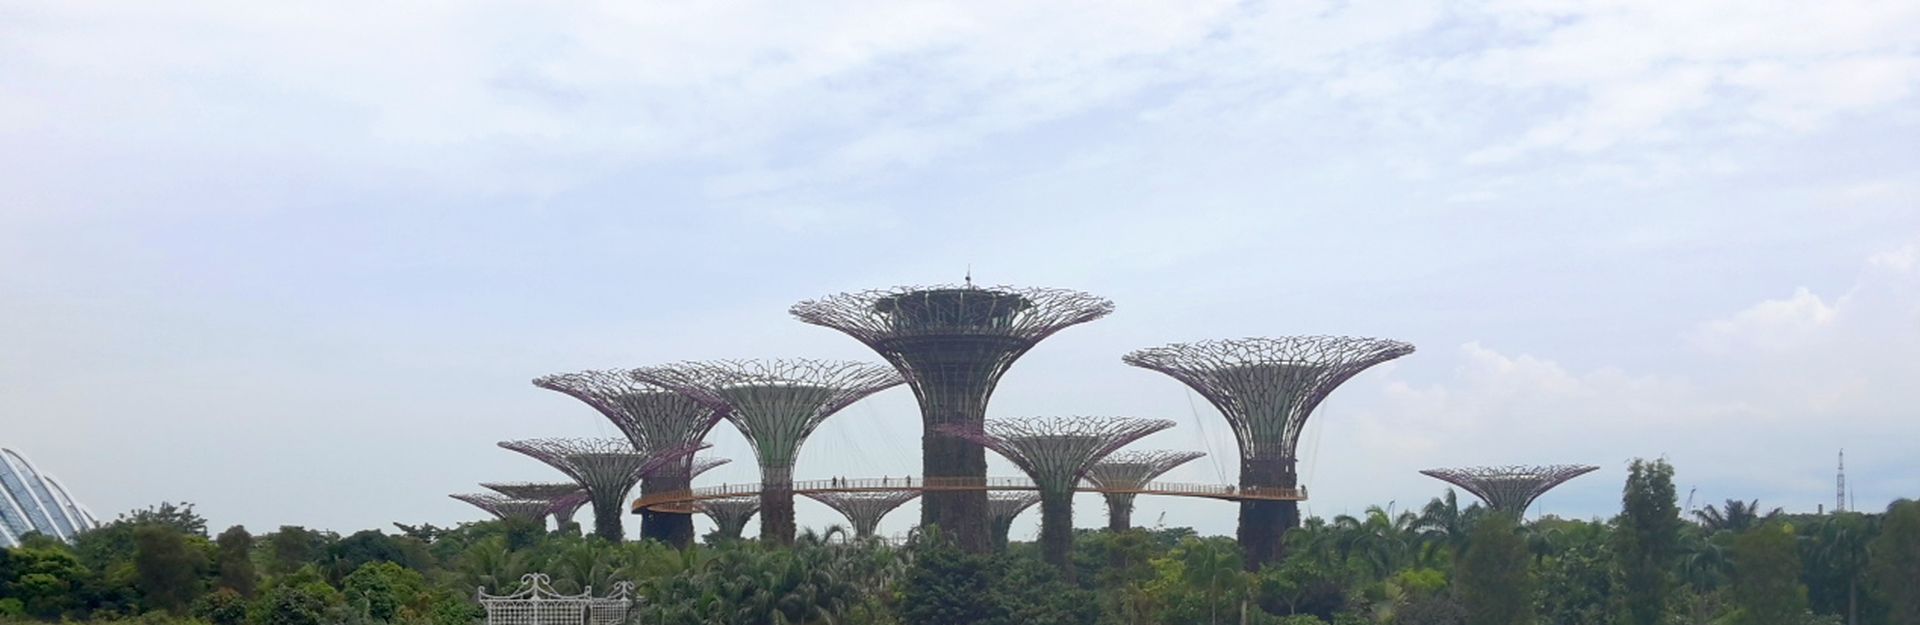 Singapore Expo trees